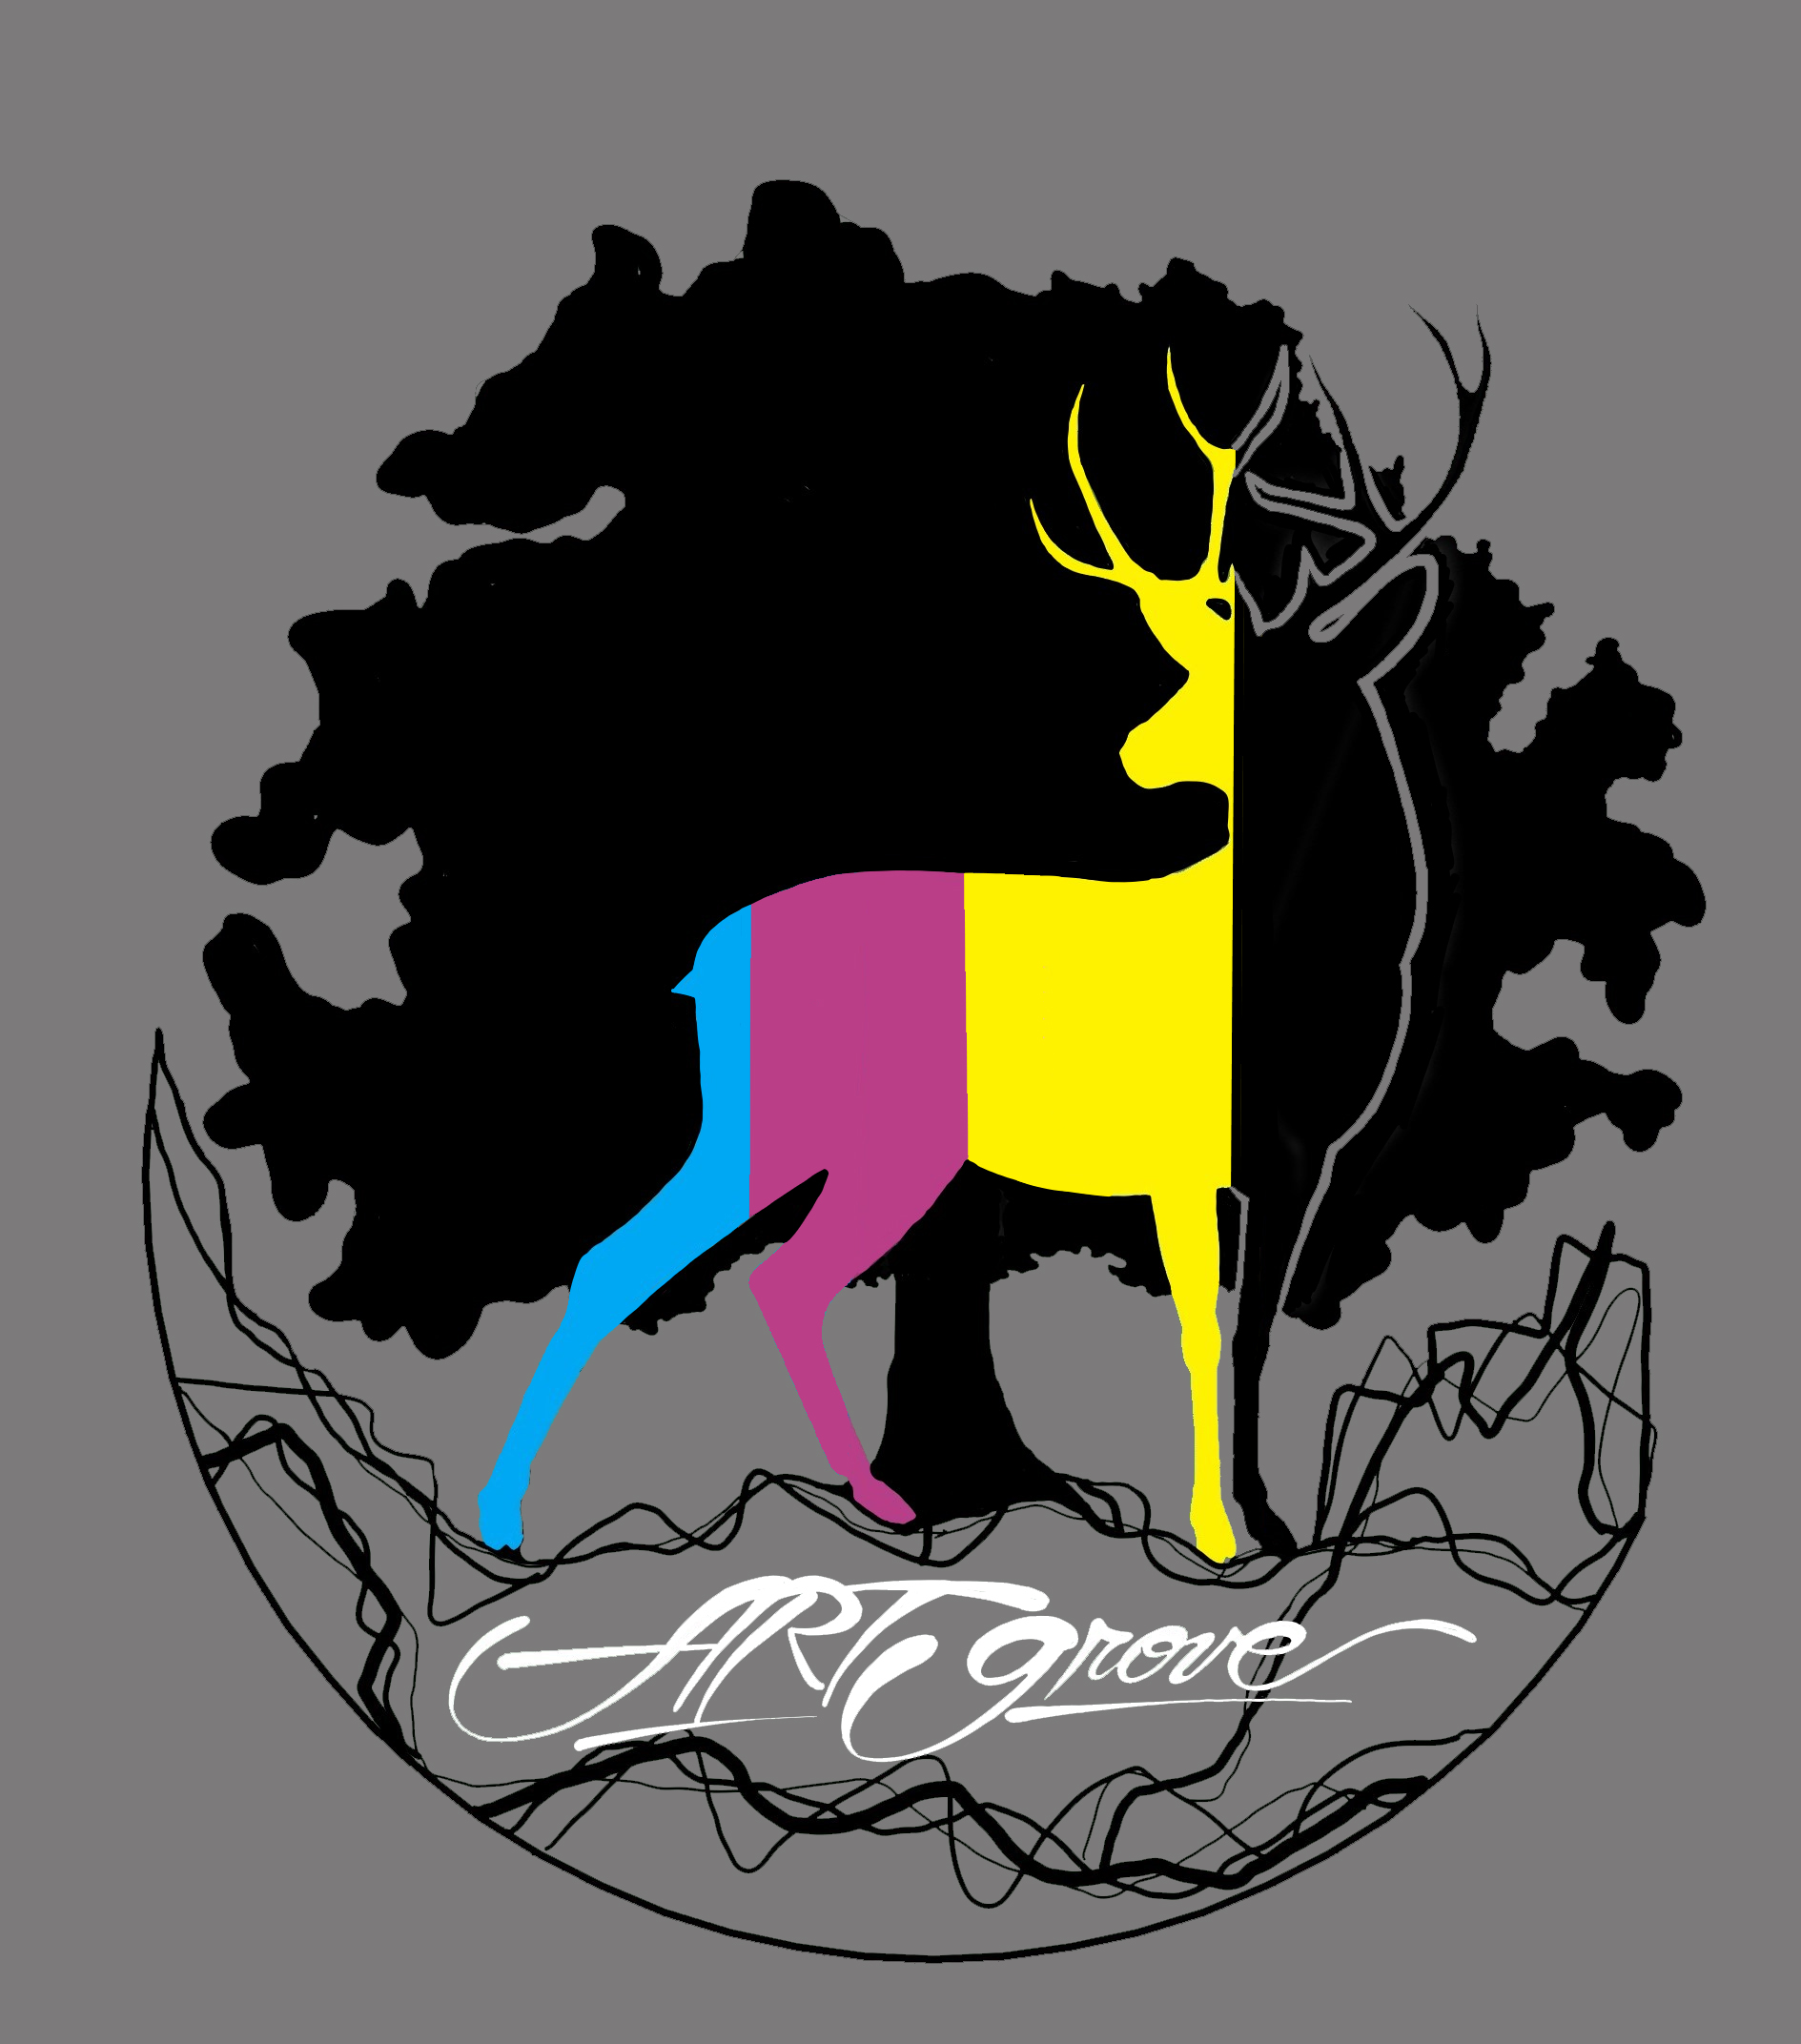 ARTgrove Logo Final